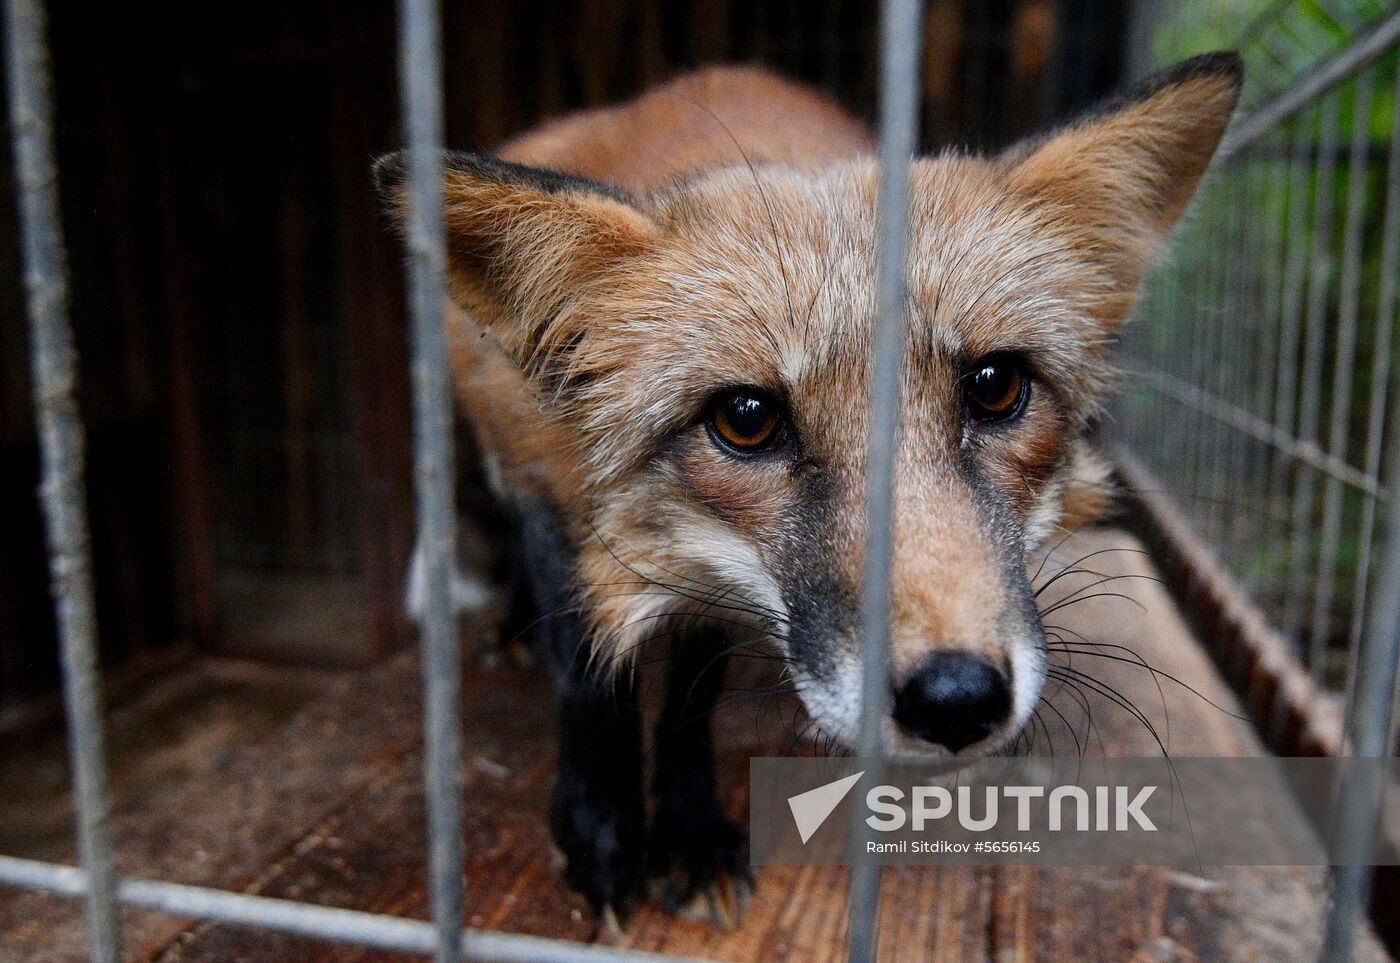 Russia Wild Animals Shelter